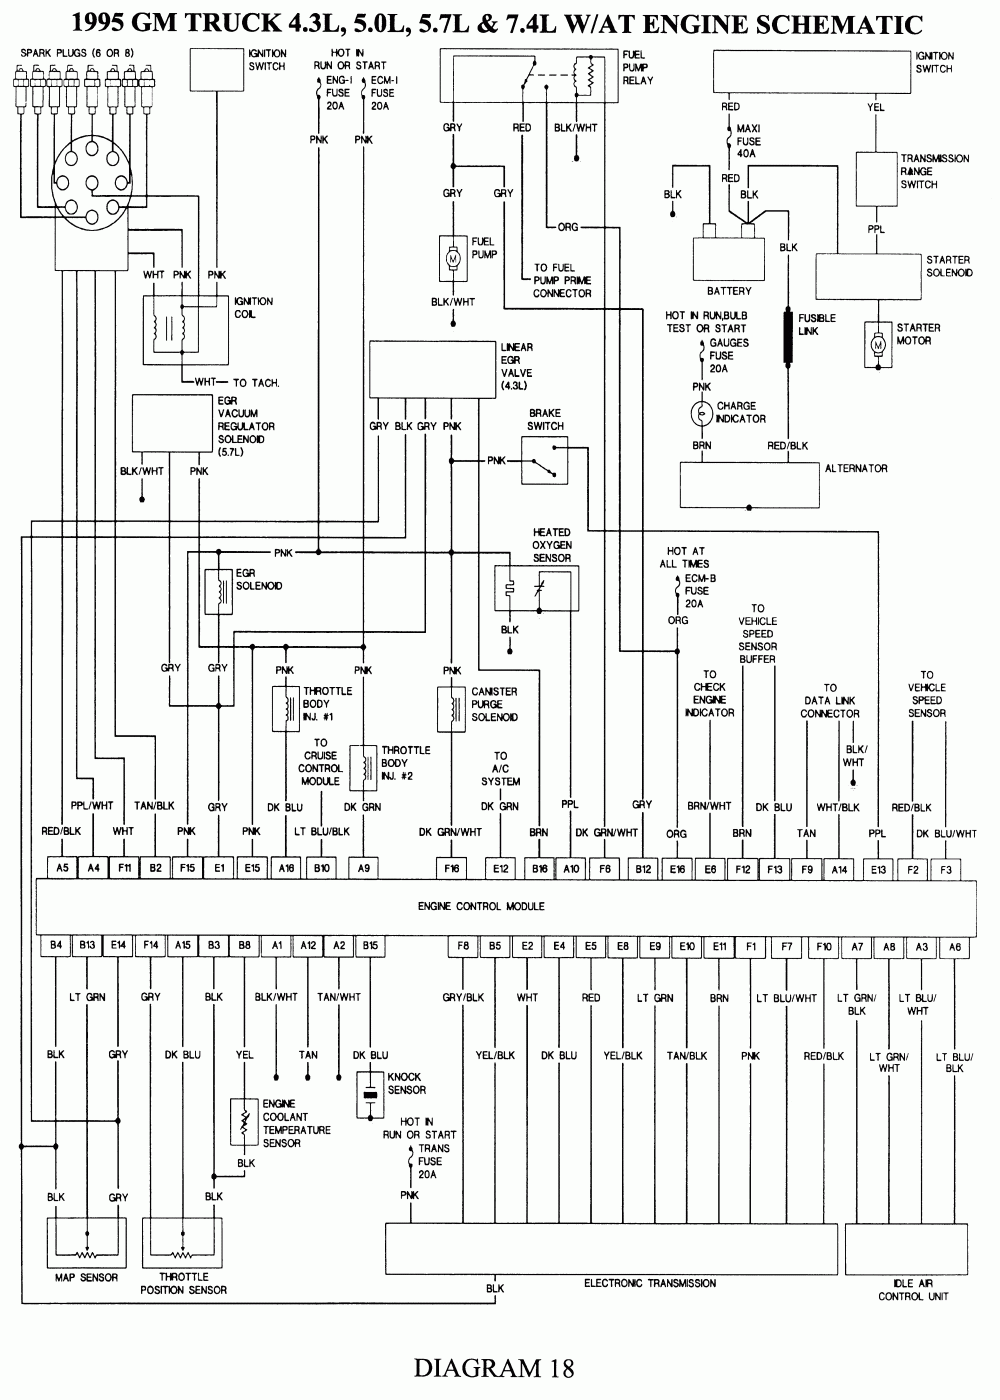 2001 Chevy Silverado Trailer Wiring Diagram | Wiring Diagram